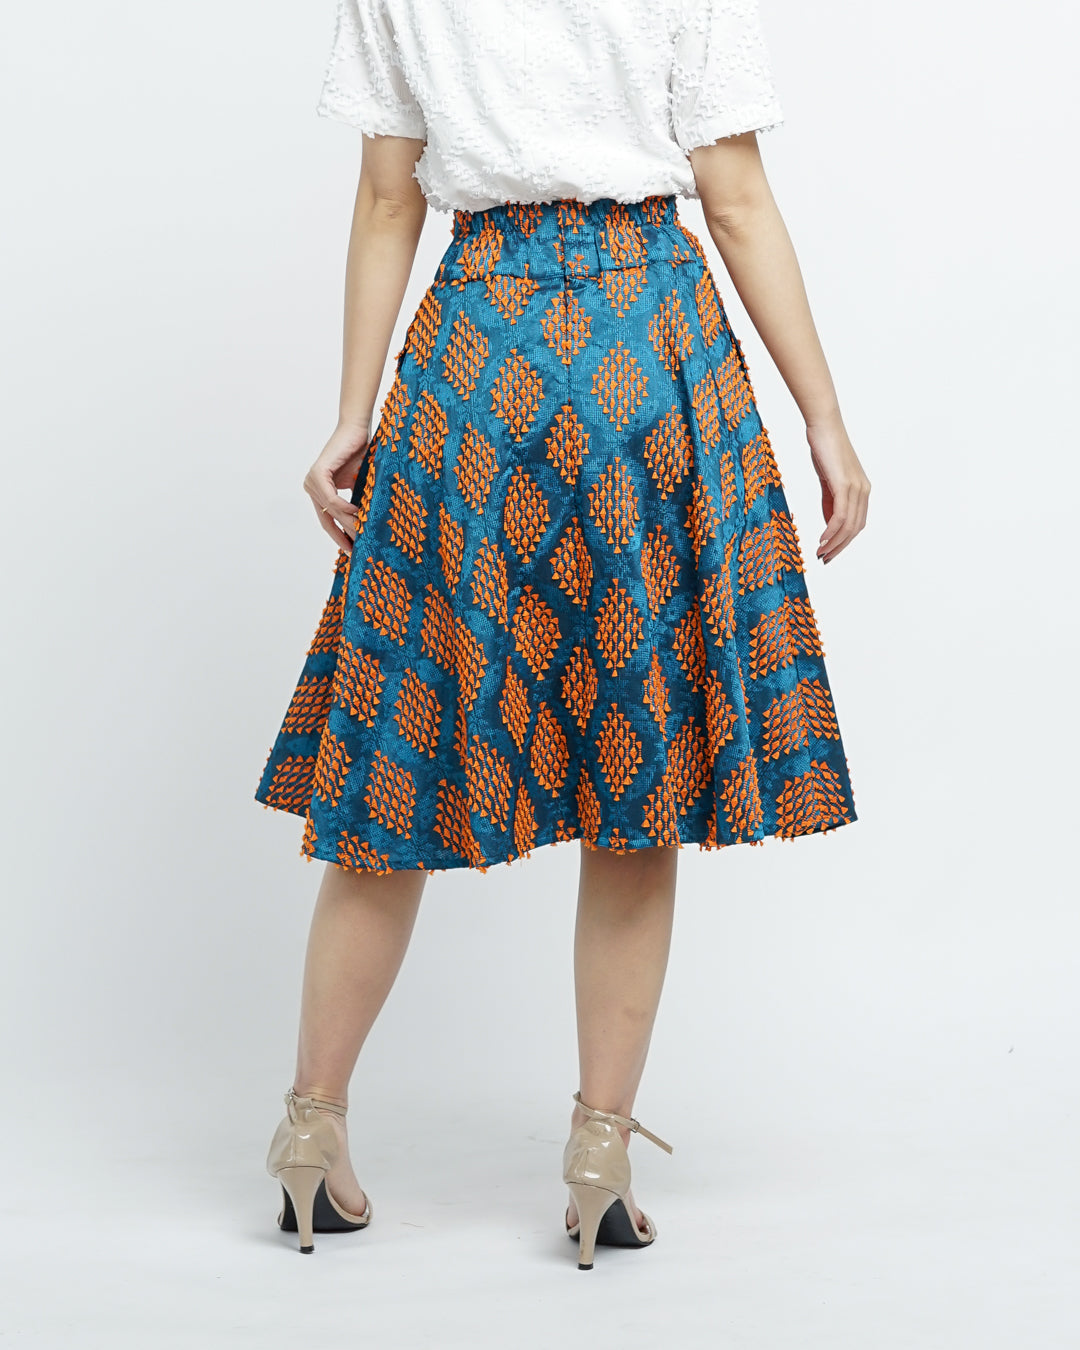 Lydia tenun high-waisted skirt